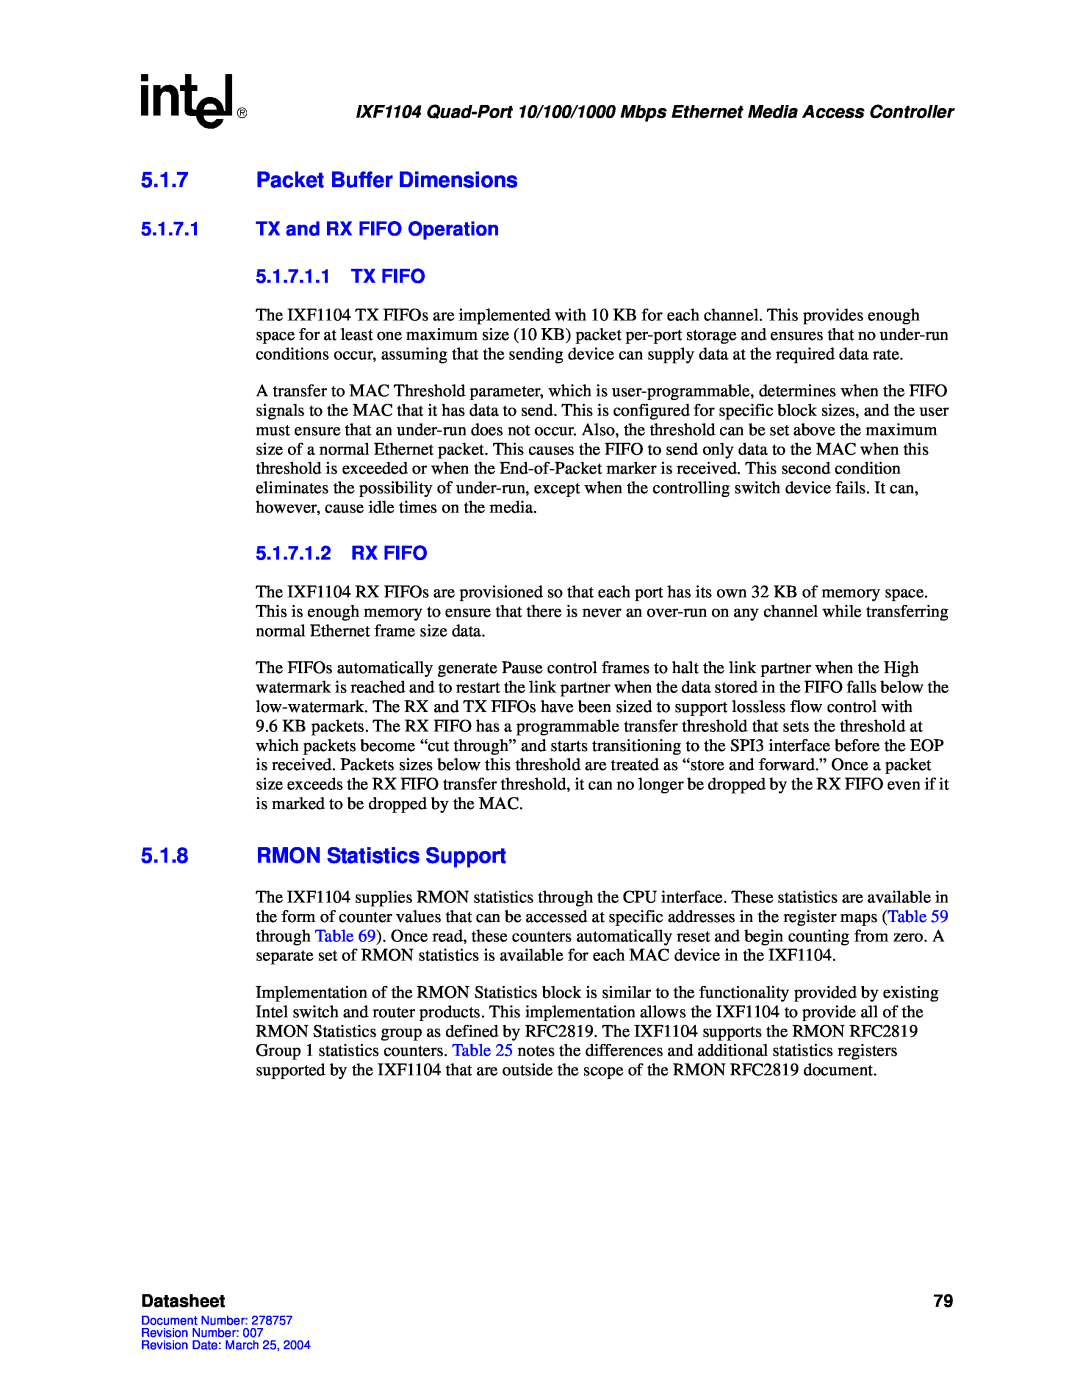 Intel IXF1104 manual 5.1.7Packet Buffer Dimensions, 5.1.8RMON Statistics Support, 5.1.7.1.2RX FIFO, Datasheet 